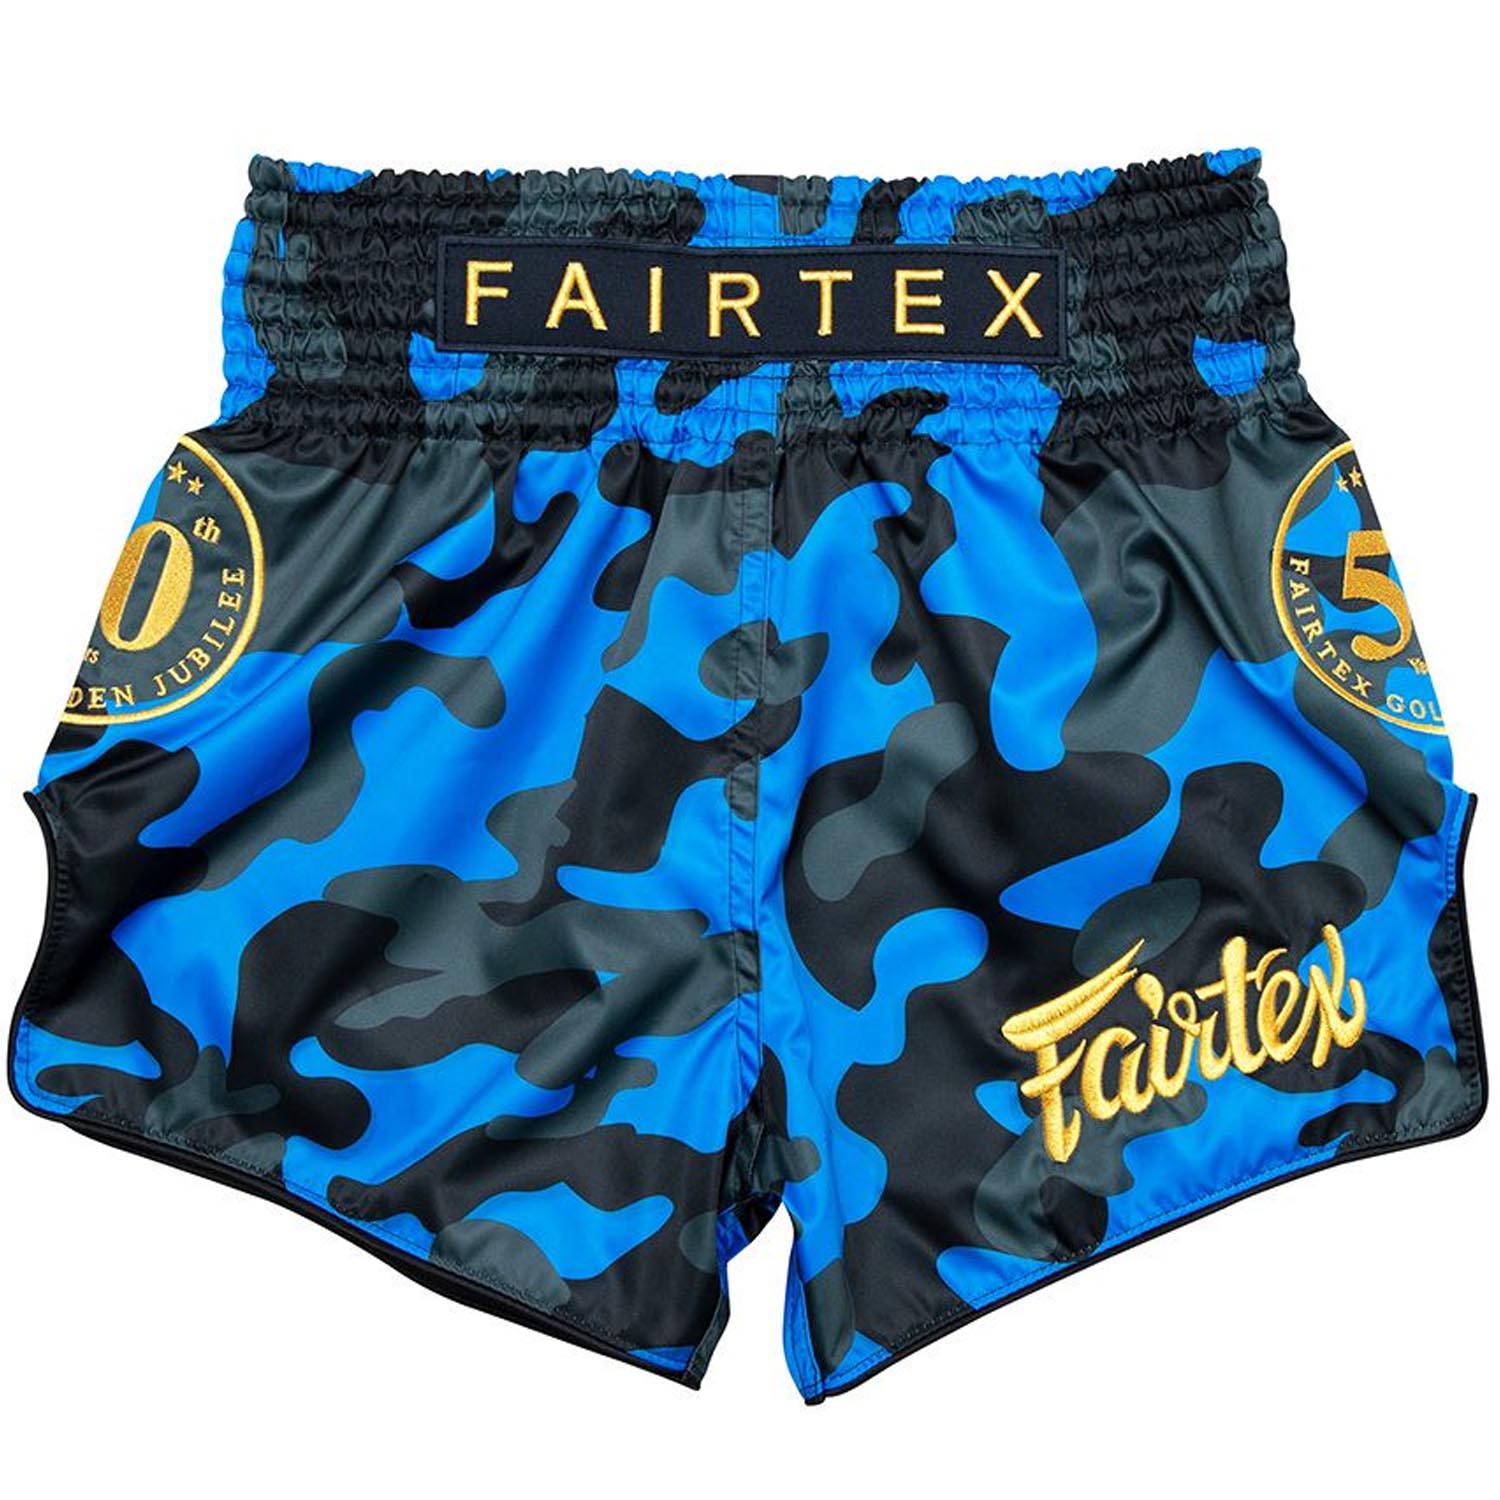 Fairtex Muay Shorts, Golden Jubilee Solid, BS1917